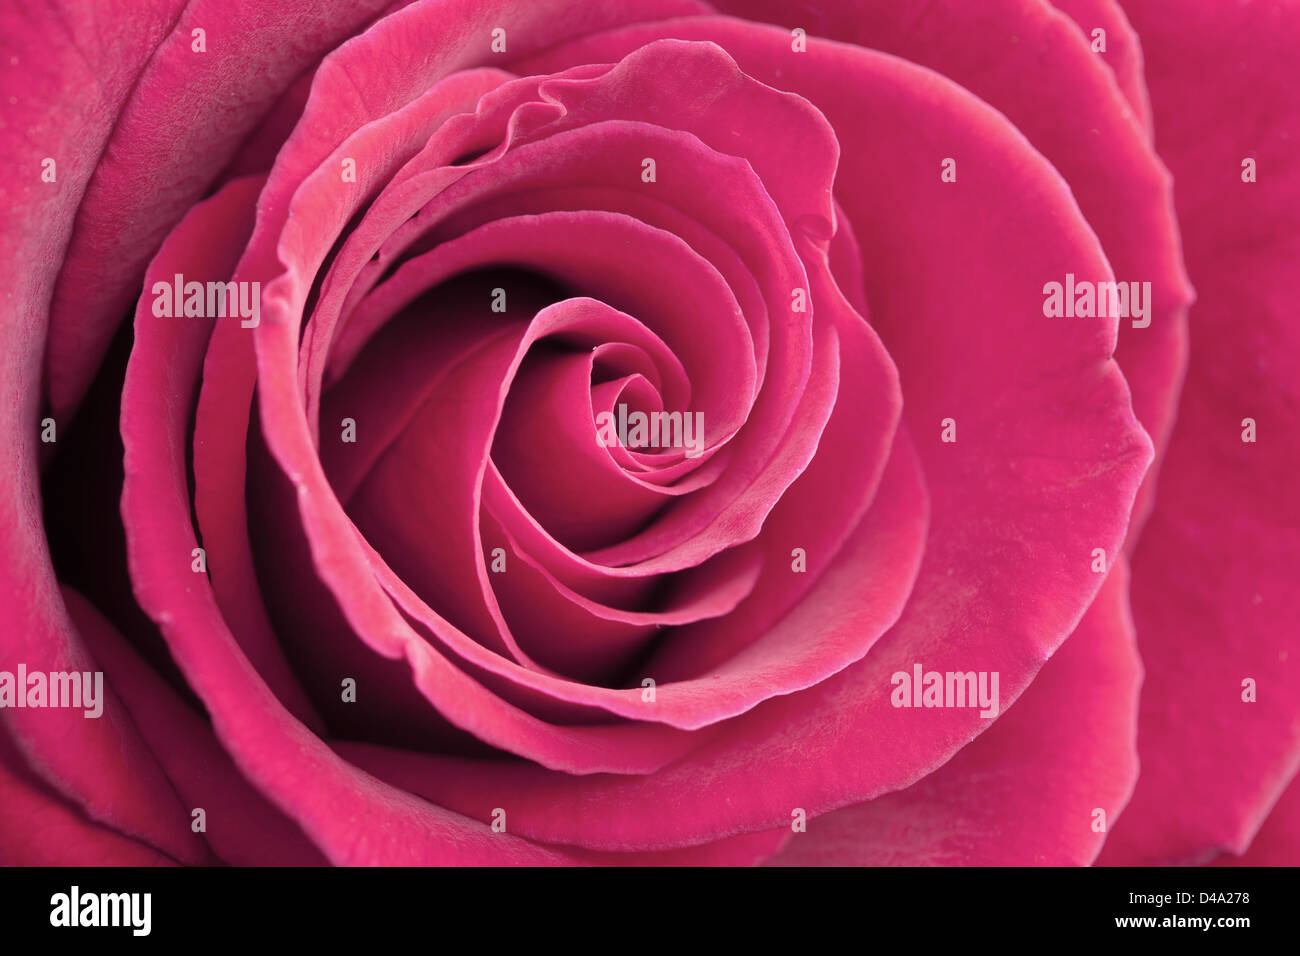 pink rose background Stock Photo